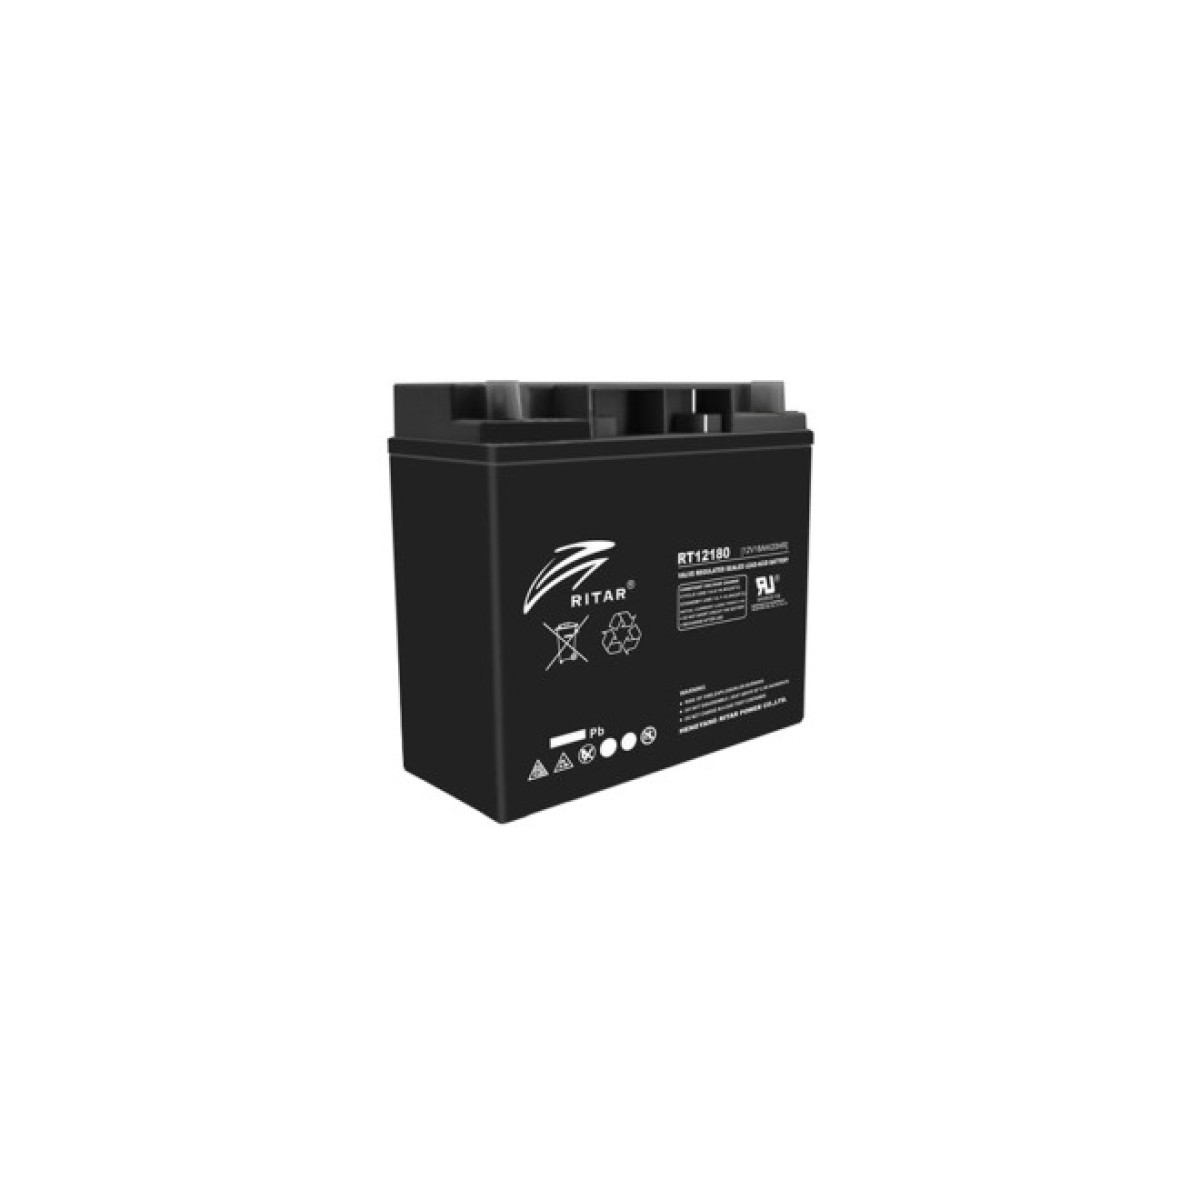 Батарея к ИБП Ritar AGM RT12180B, 12V-18Ah, Black (RT12180B) 256_256.jpg